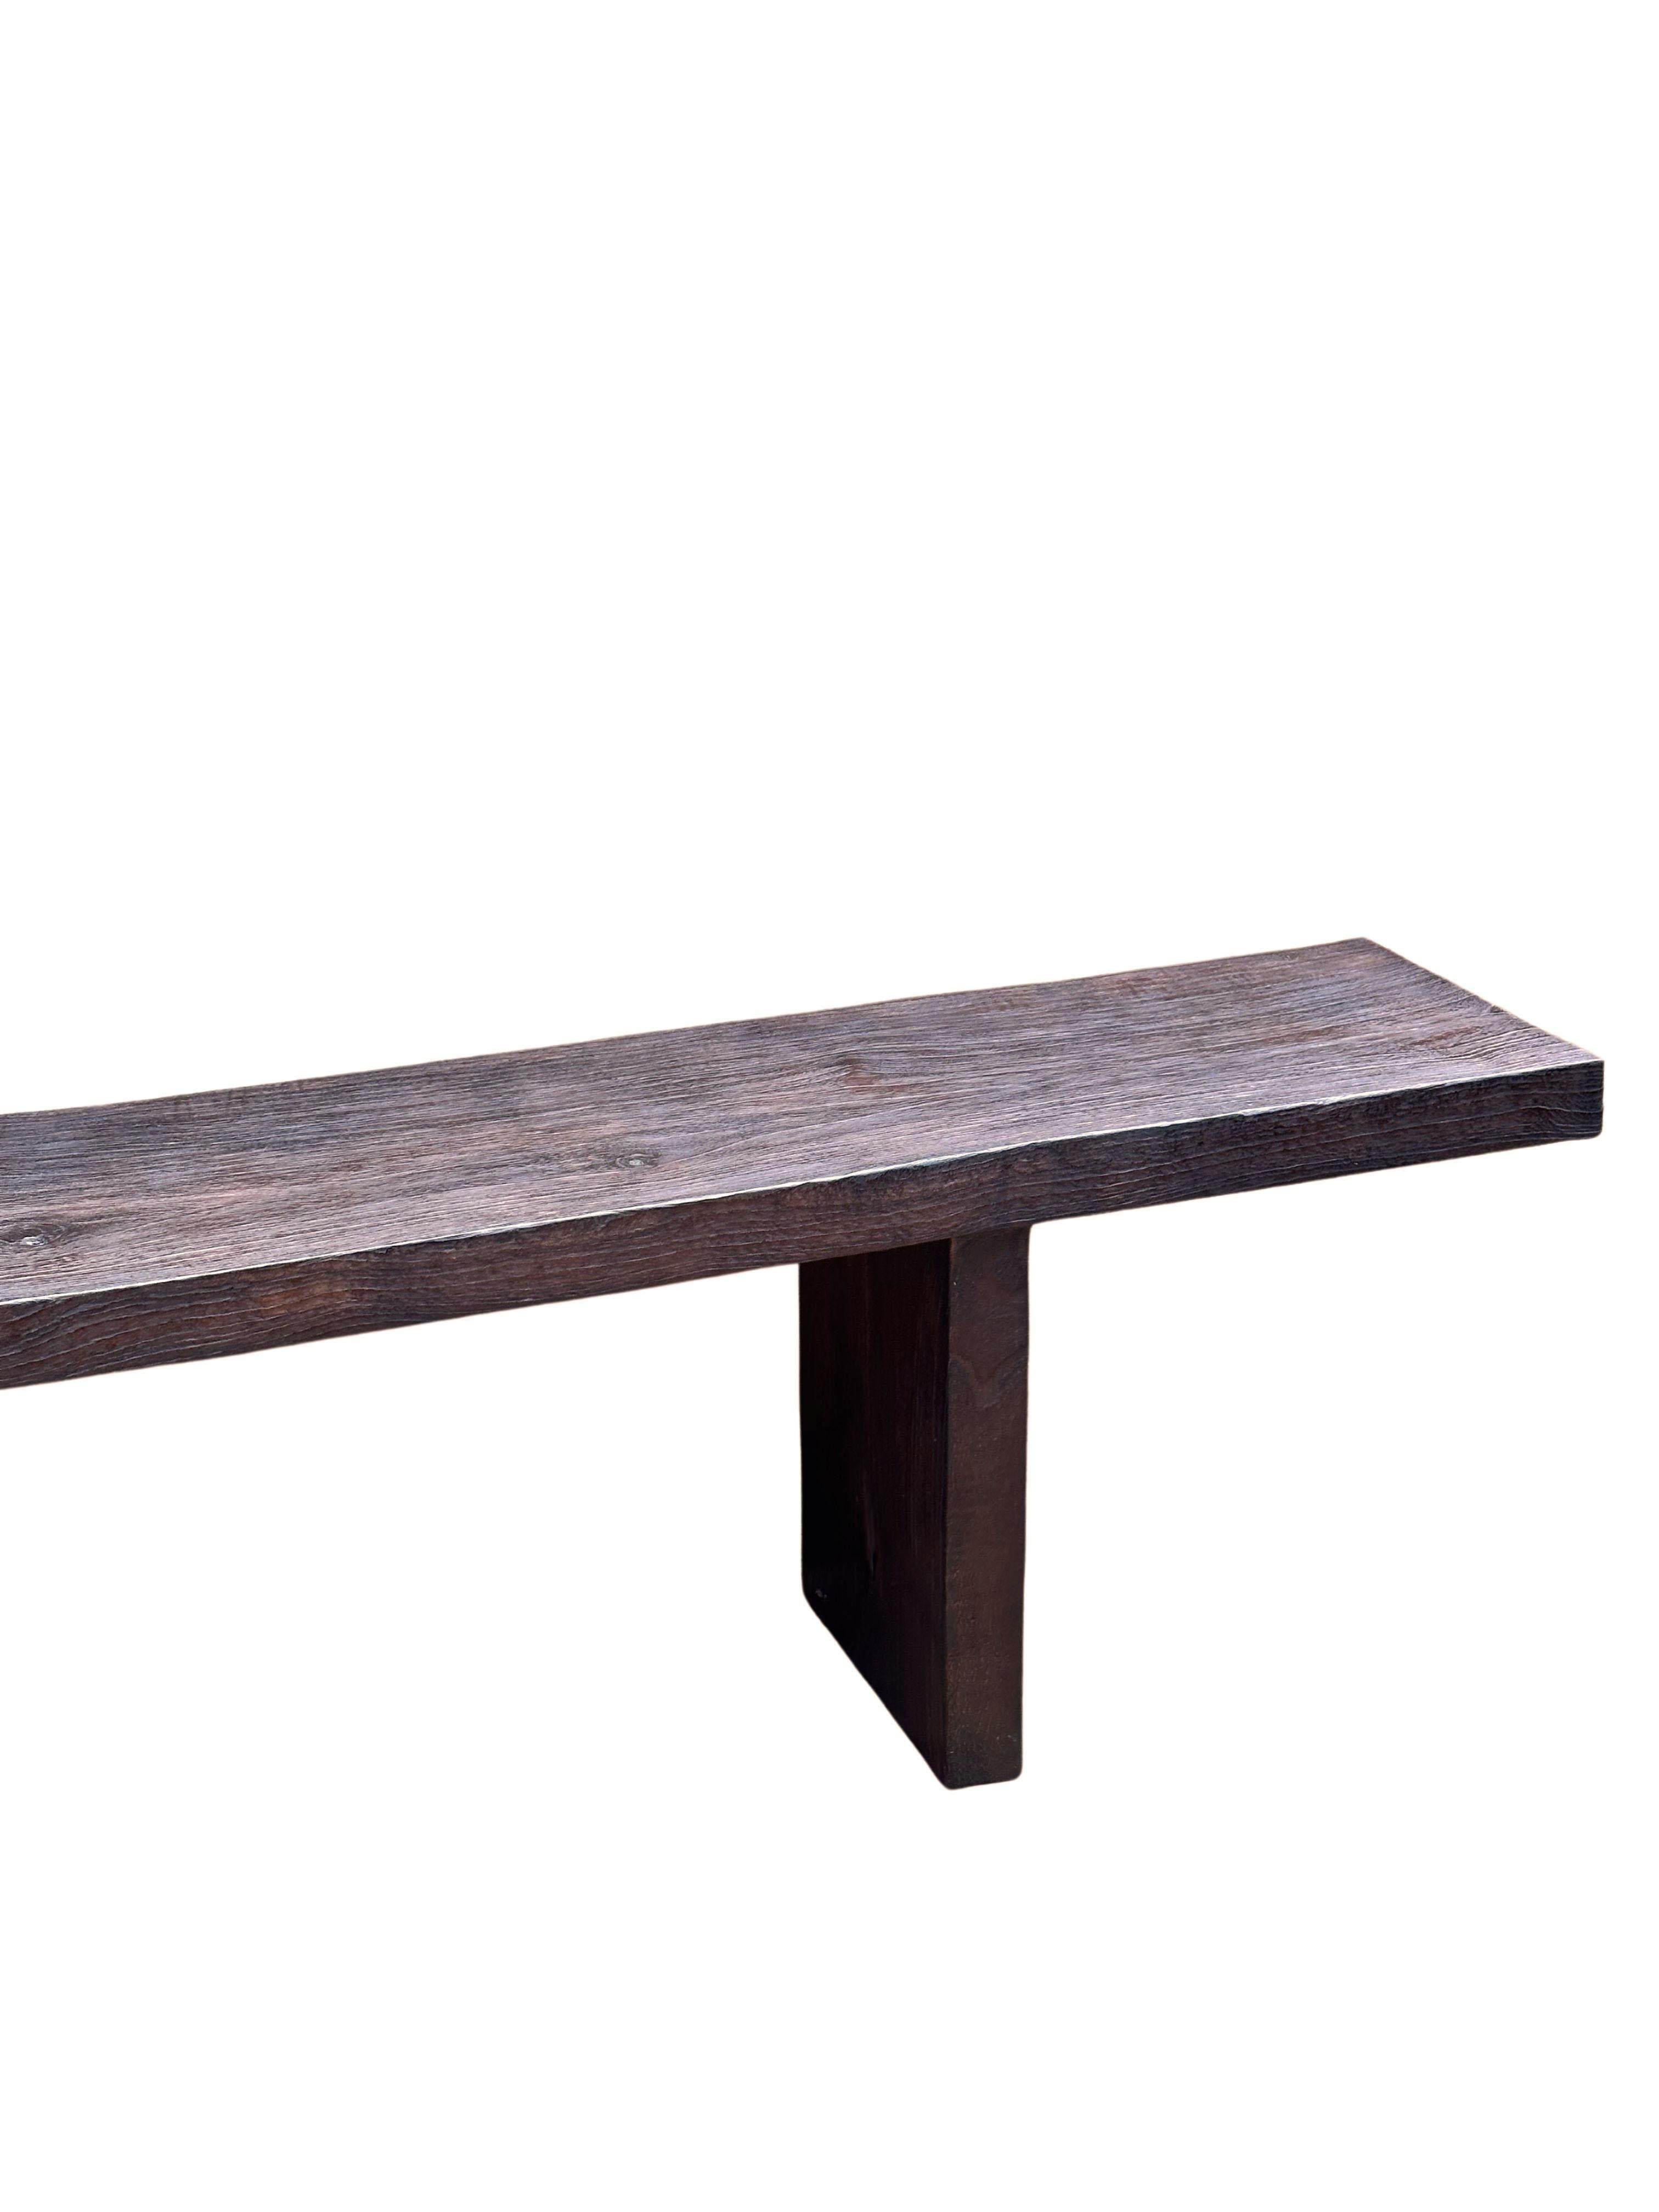 Sculptural Teak Wood Bench Modern Organic, Stunning Textures, Espresso Finish For Sale 2